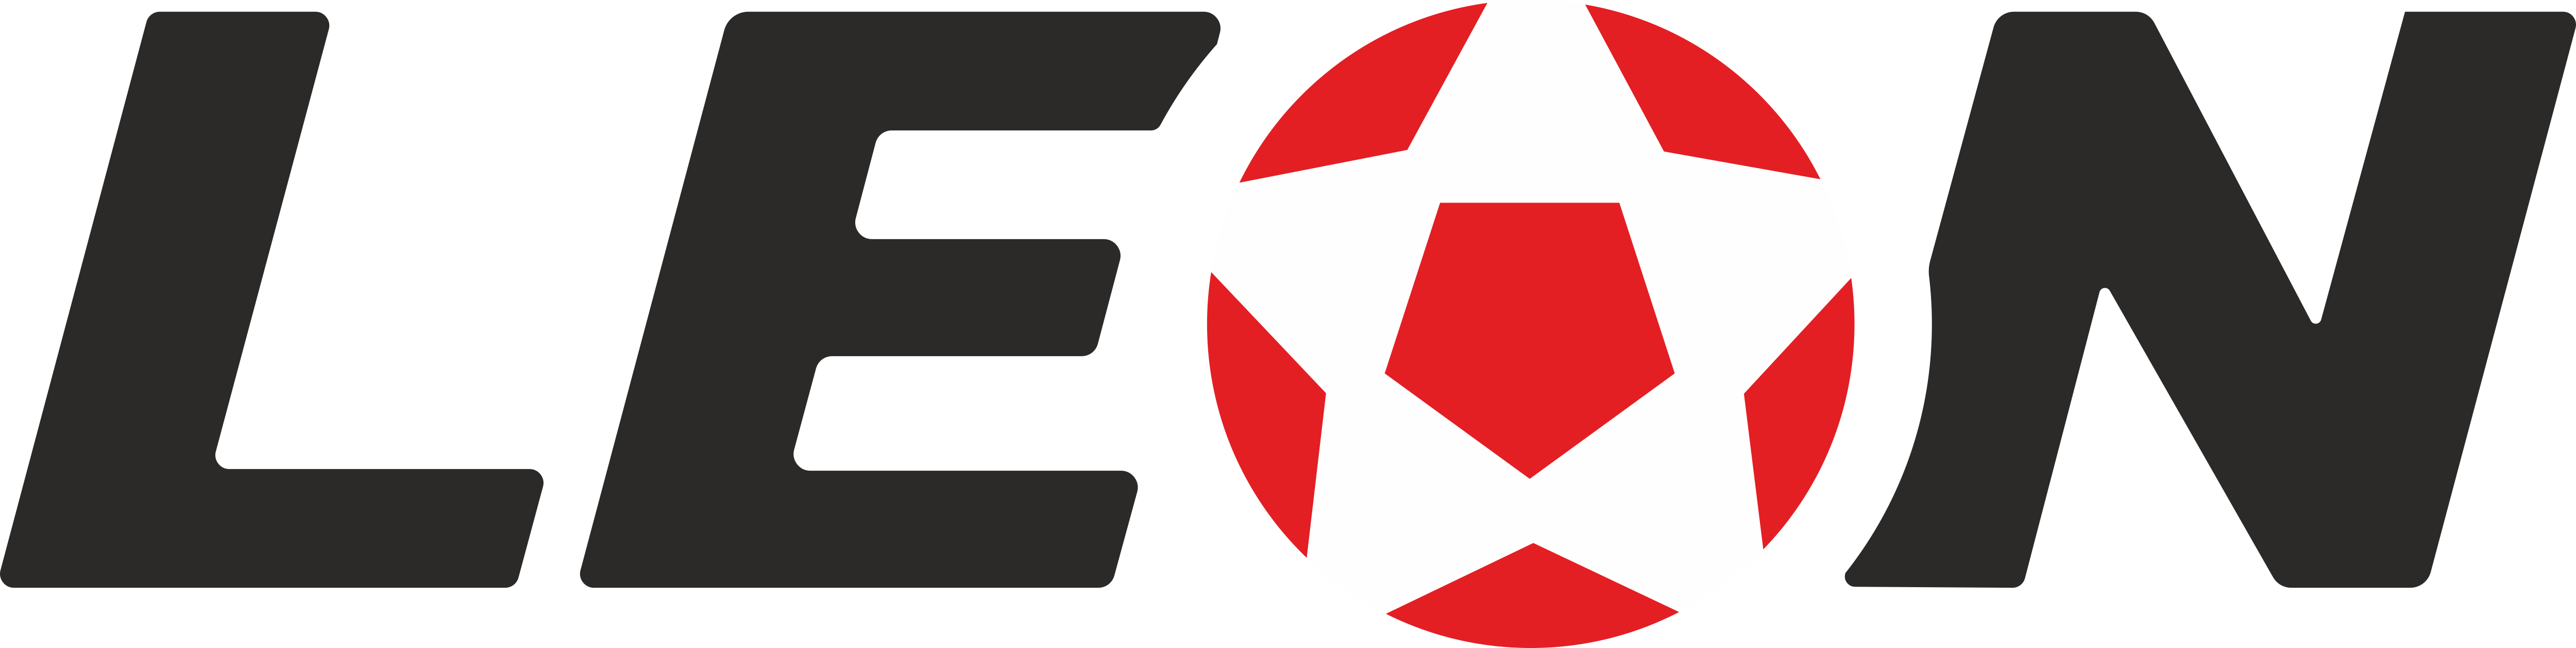 Логотип бк Леон